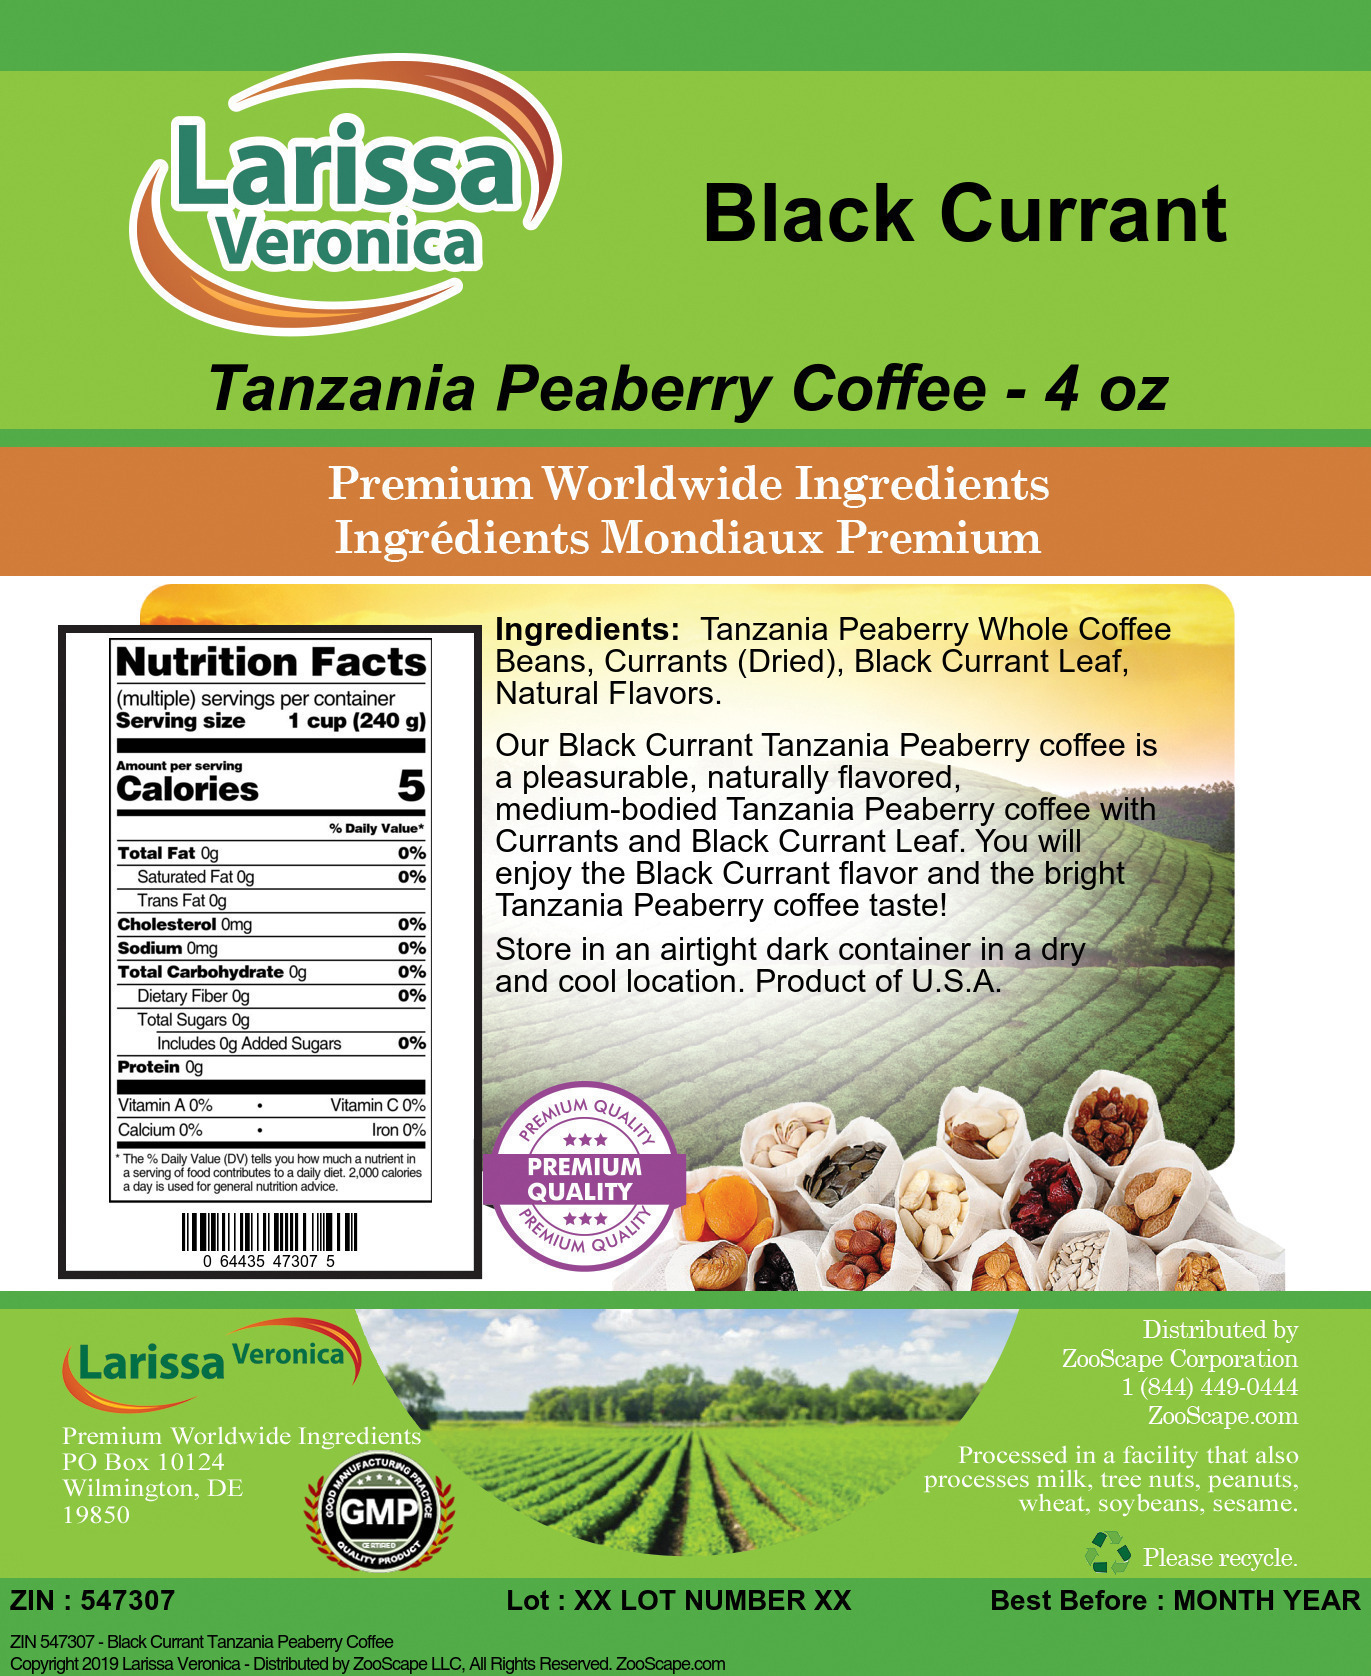 Black Currant Tanzania Peaberry Coffee - Label